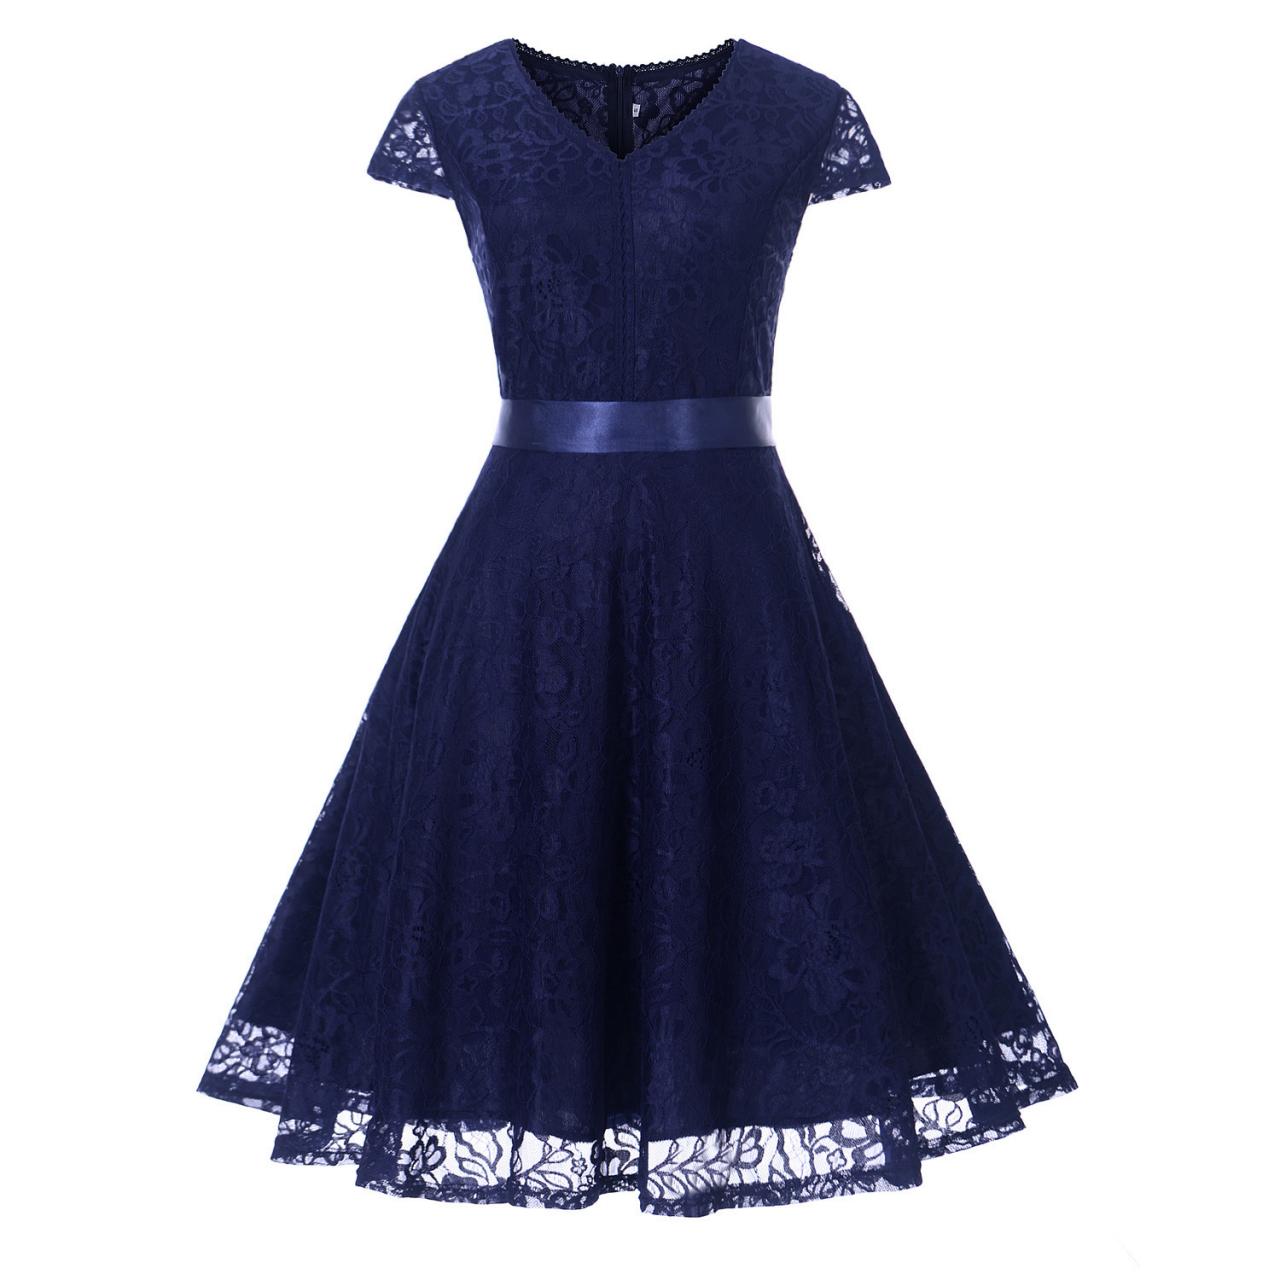 Elegant V Neck Short Sleeve Lace Dress With Belt - Navy Blue